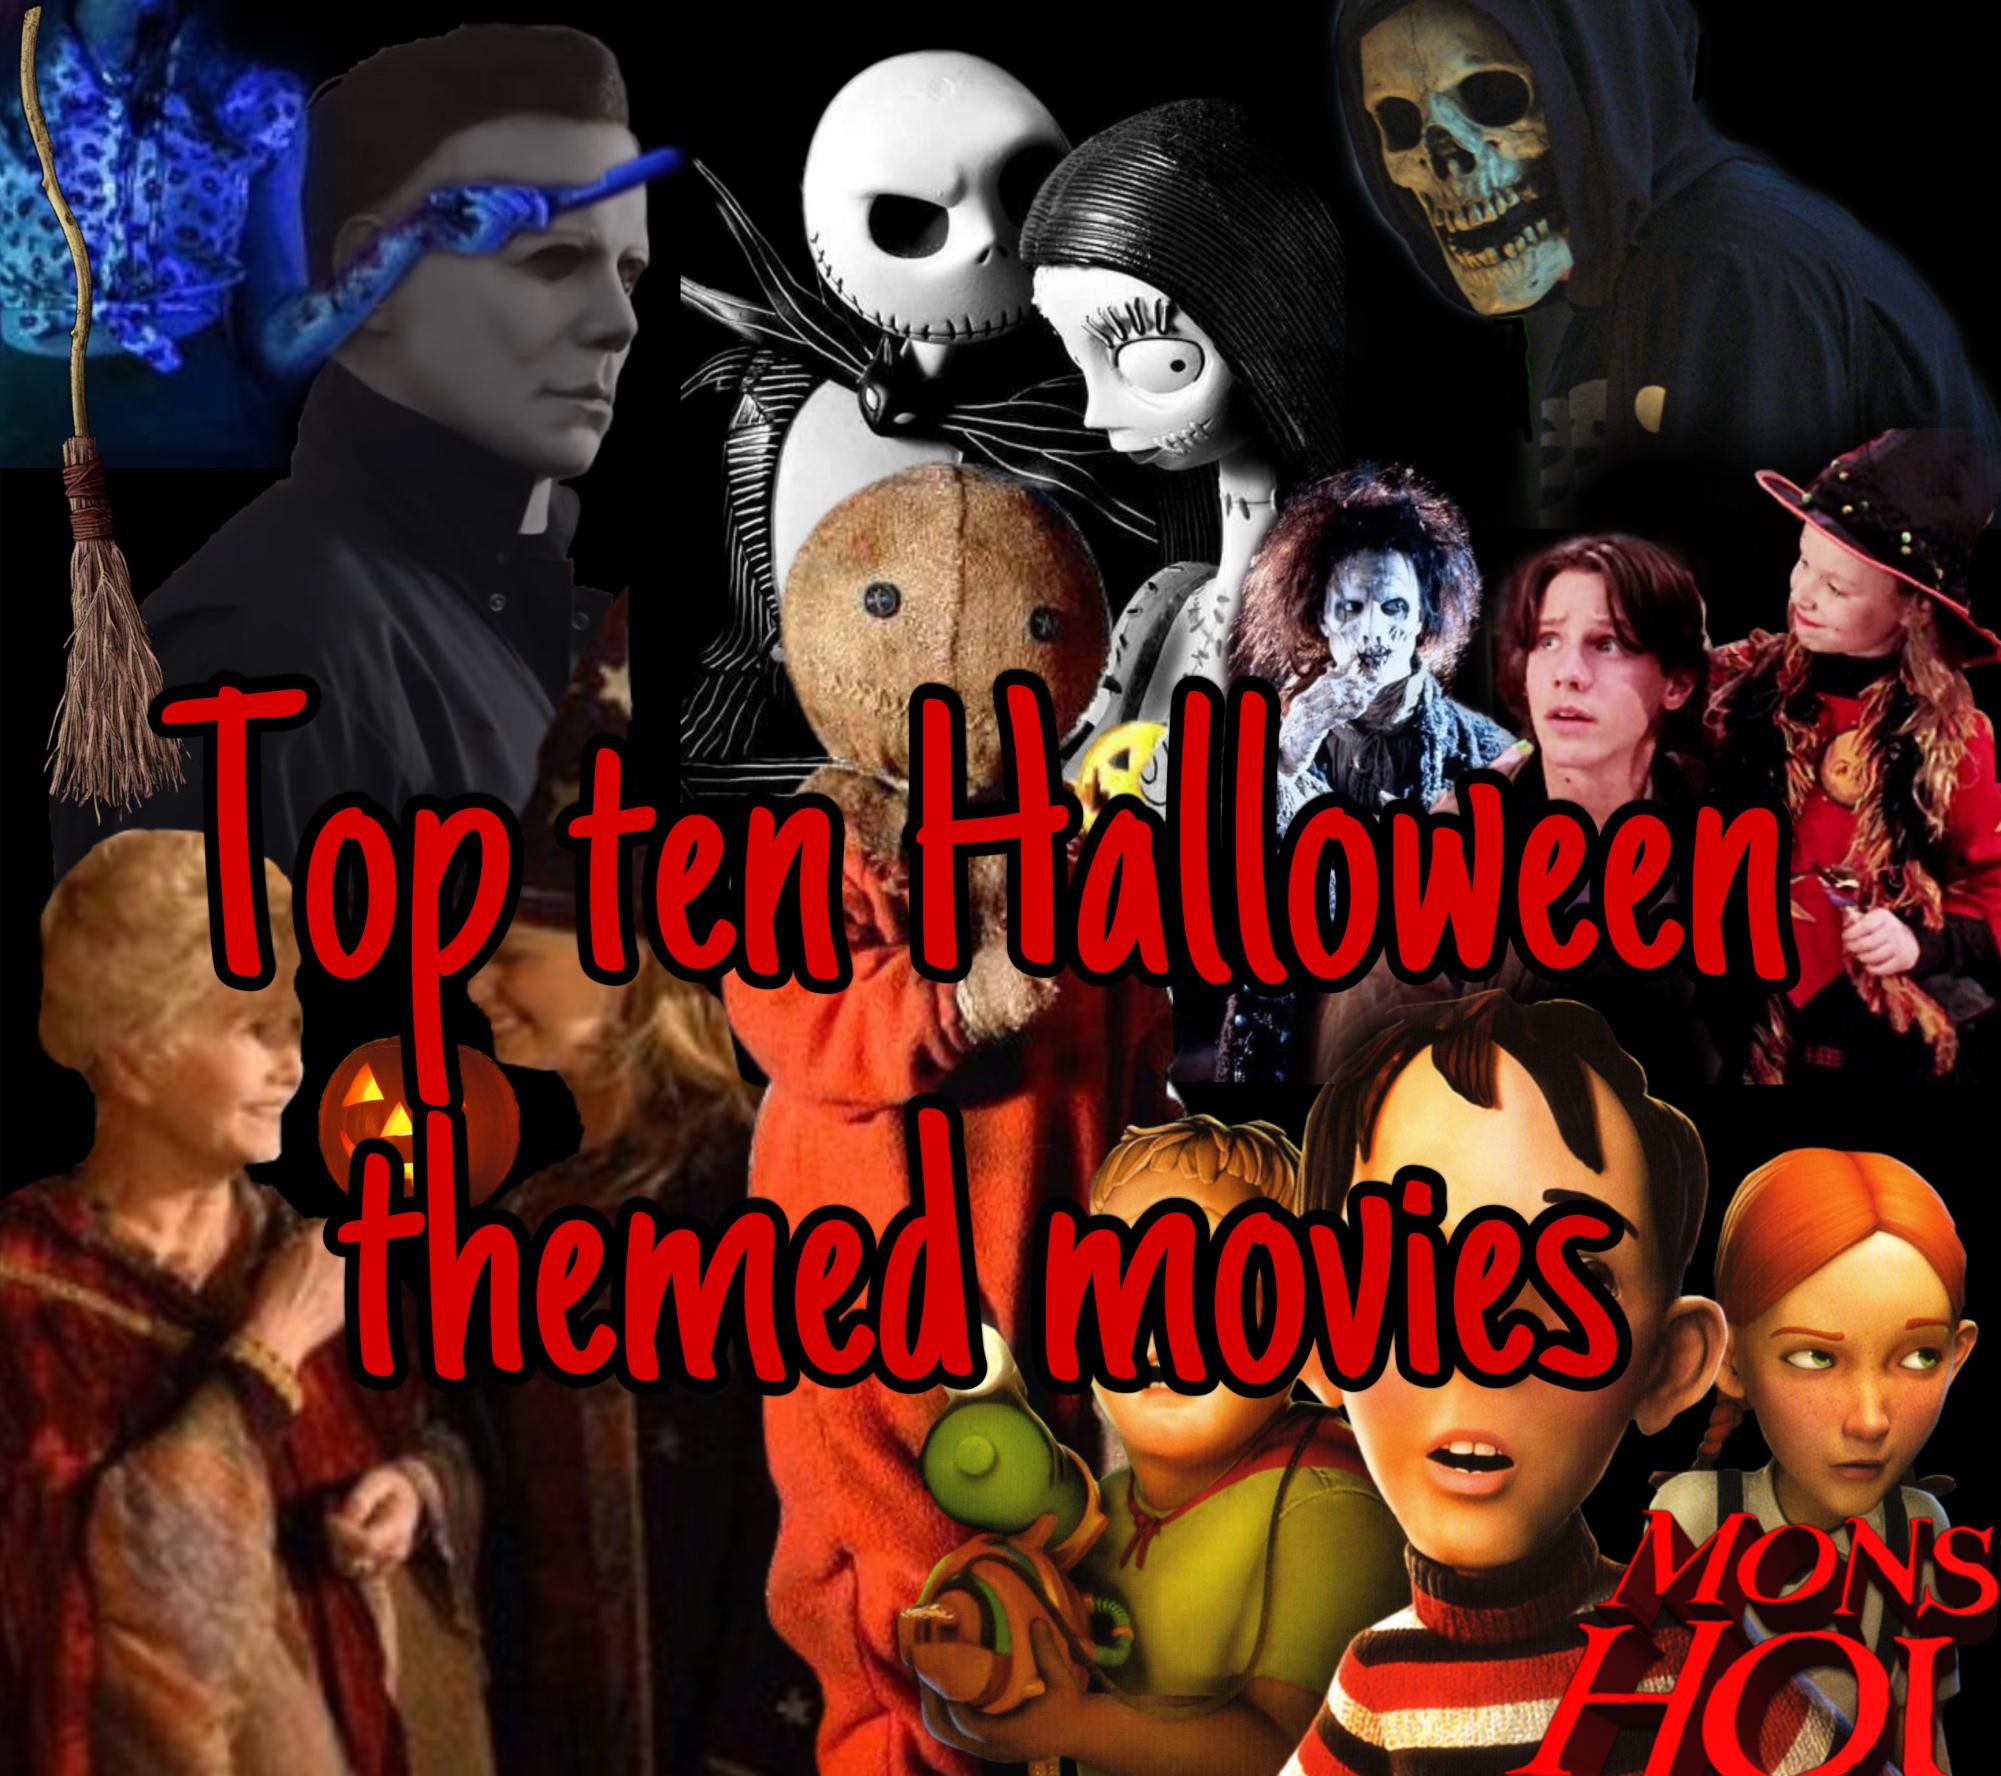 Top 10 Halloween-themed movies